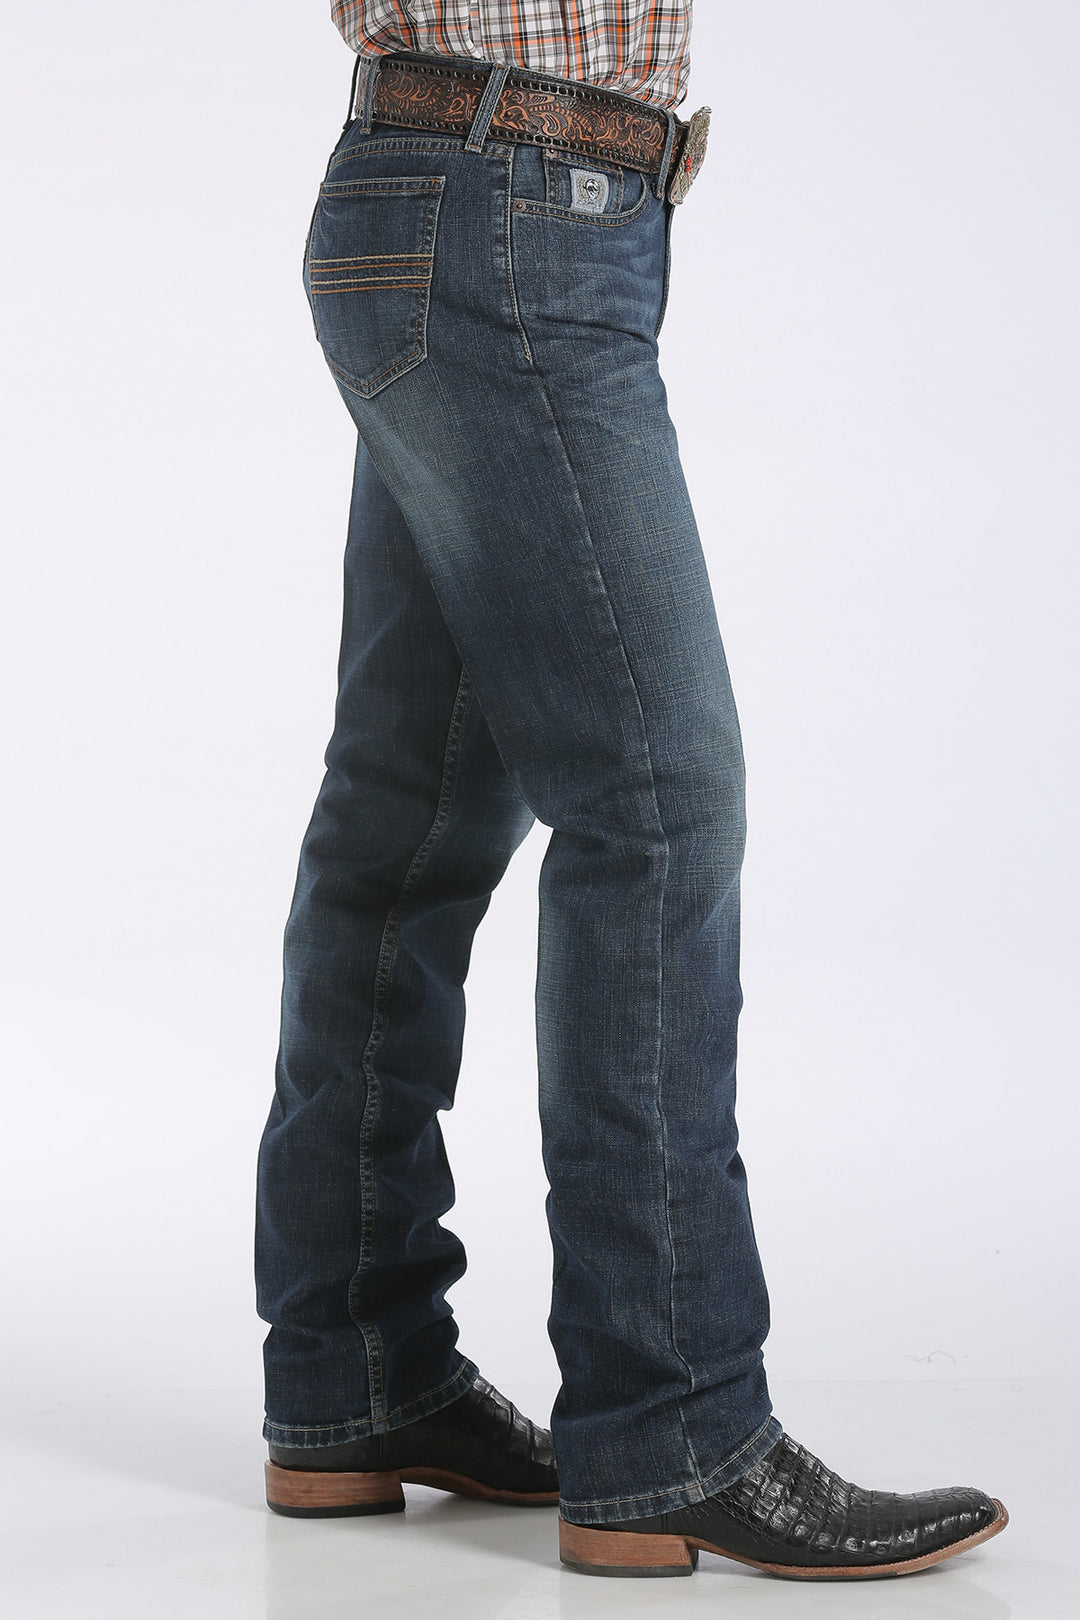 Cinch  Men's Silver Label Indigo Wash Slim Fit Jeans